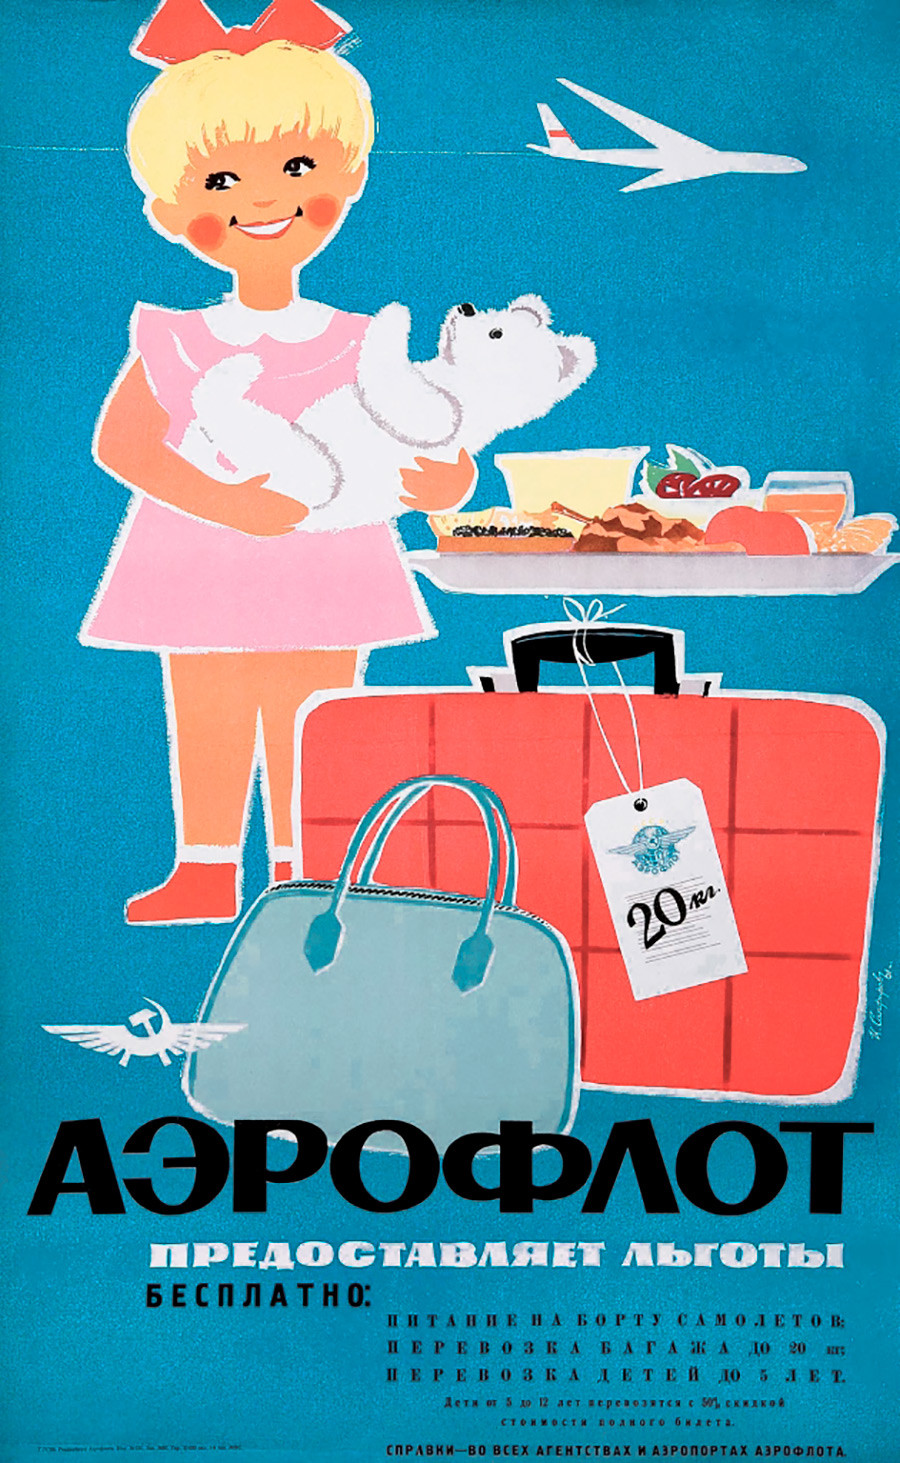 “Aeroflot memberikan manfaat”